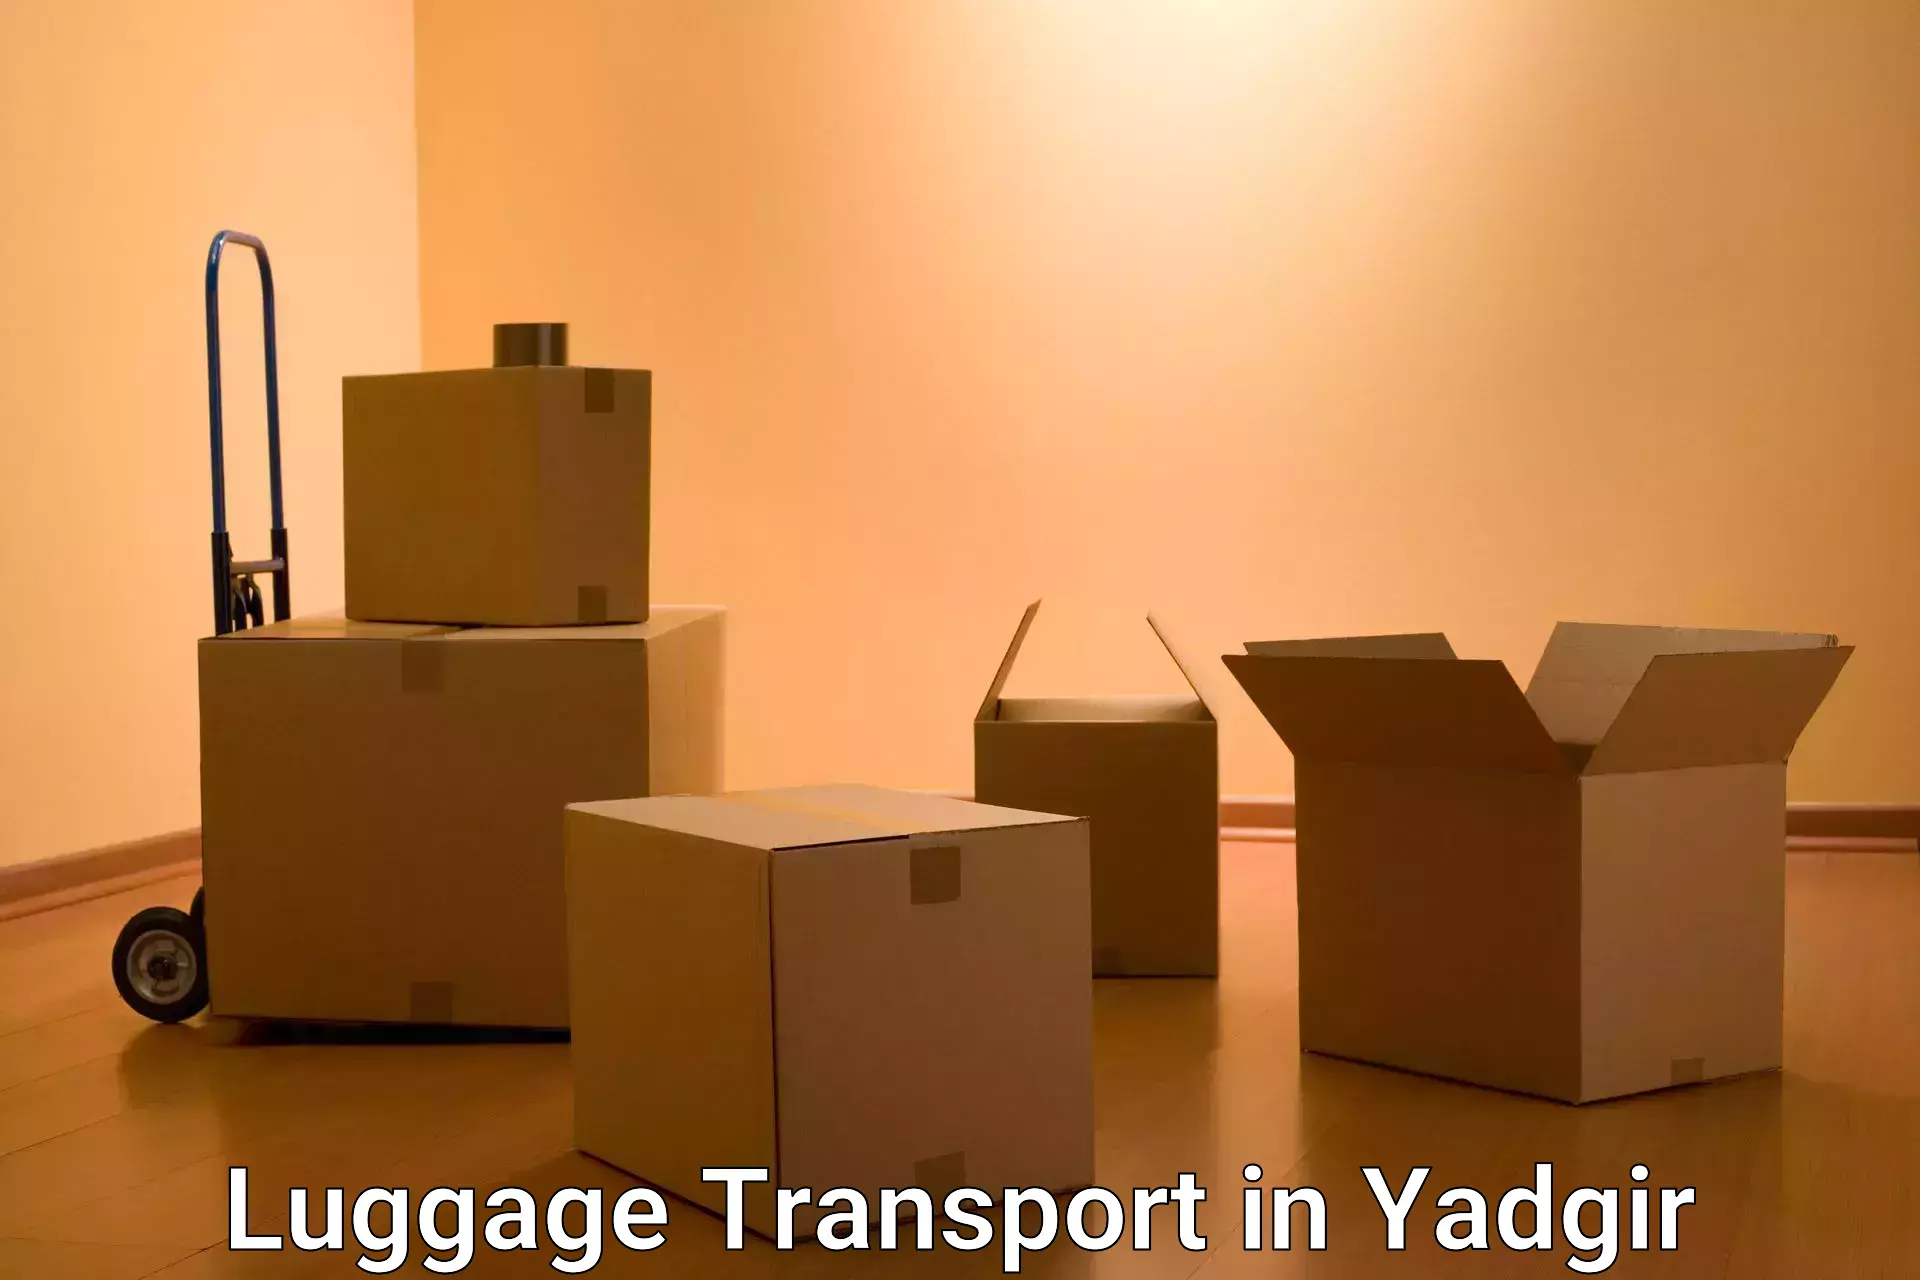 Luggage shipment tracking in Yadgir